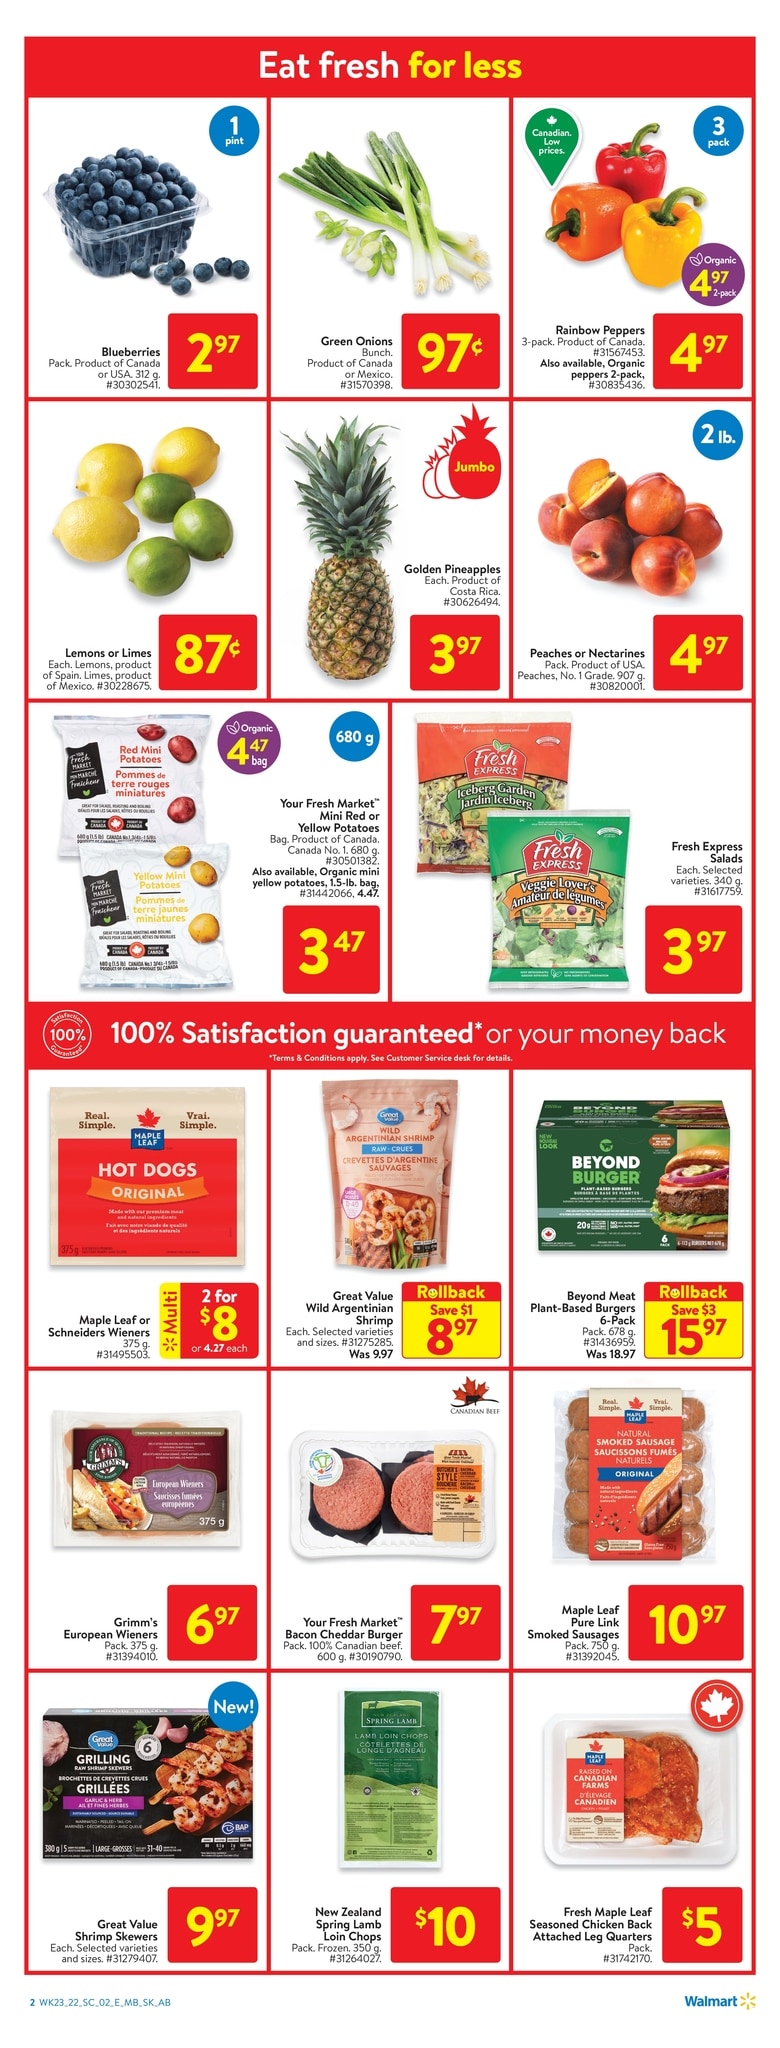 Walmart - Weekly Flyer Specials - Page 2